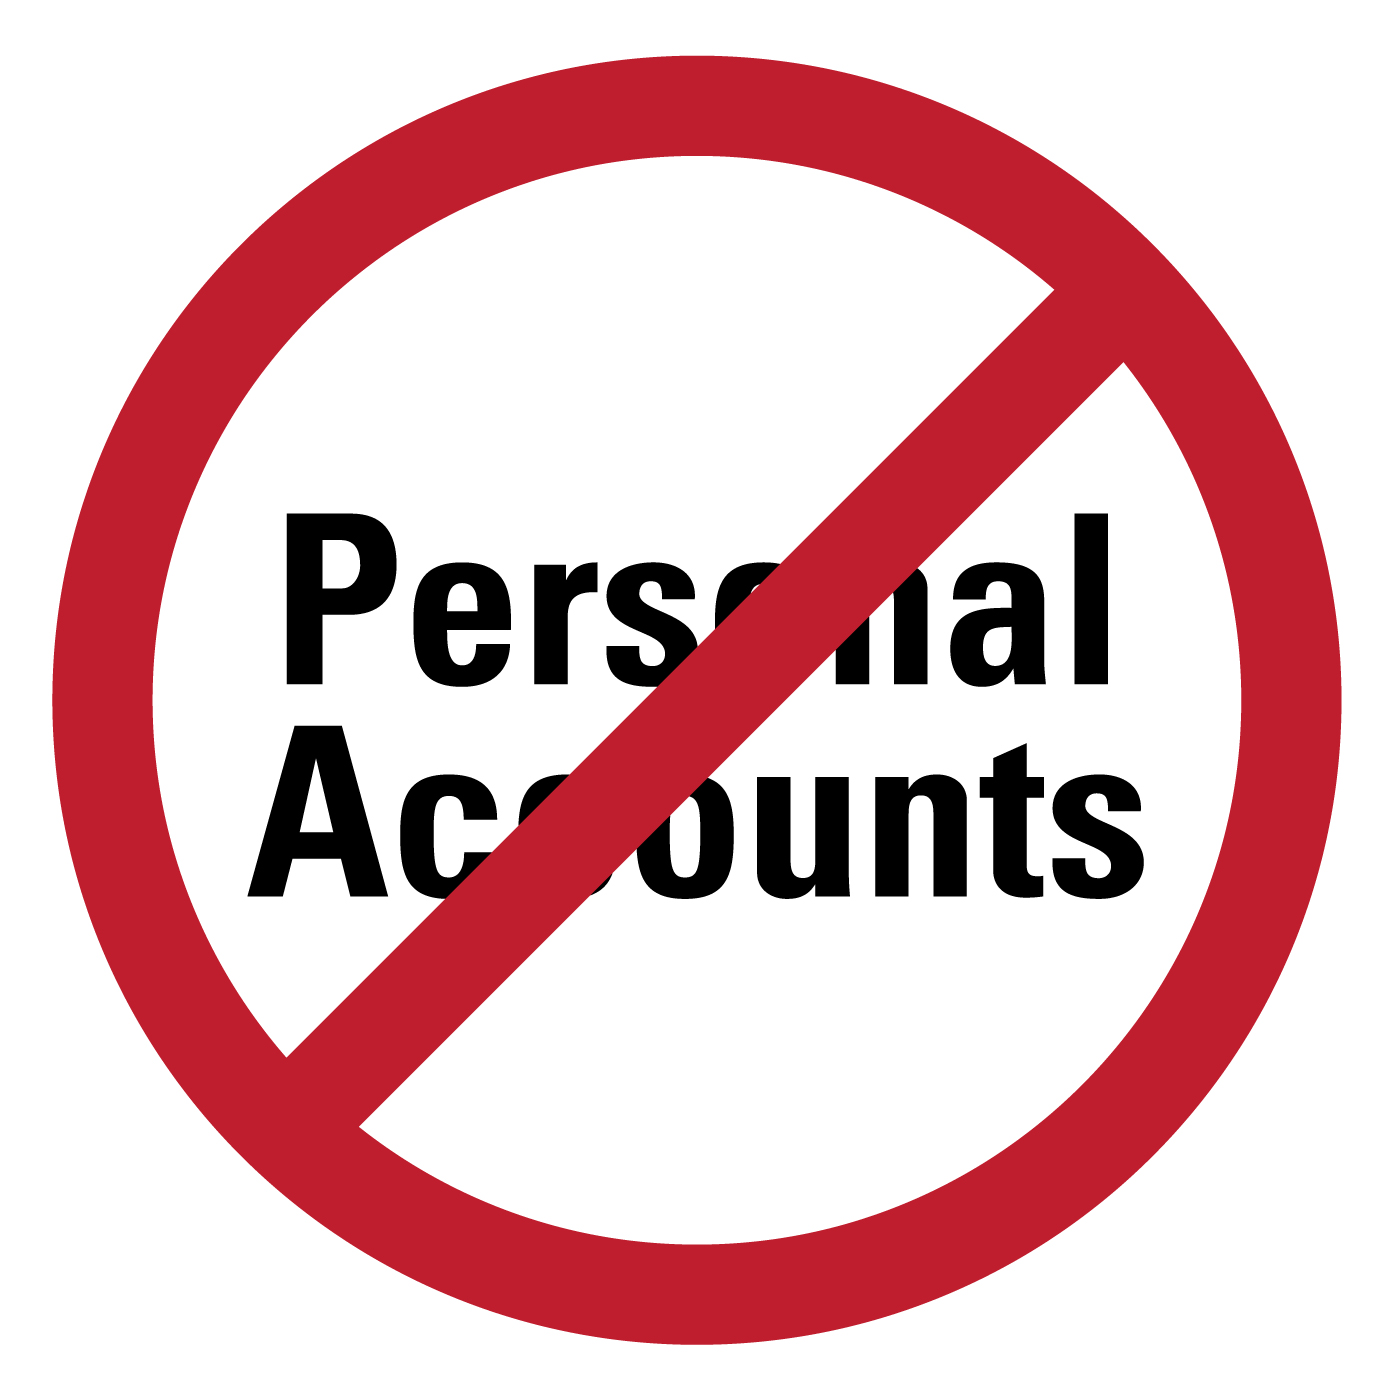 No Personal Accounts